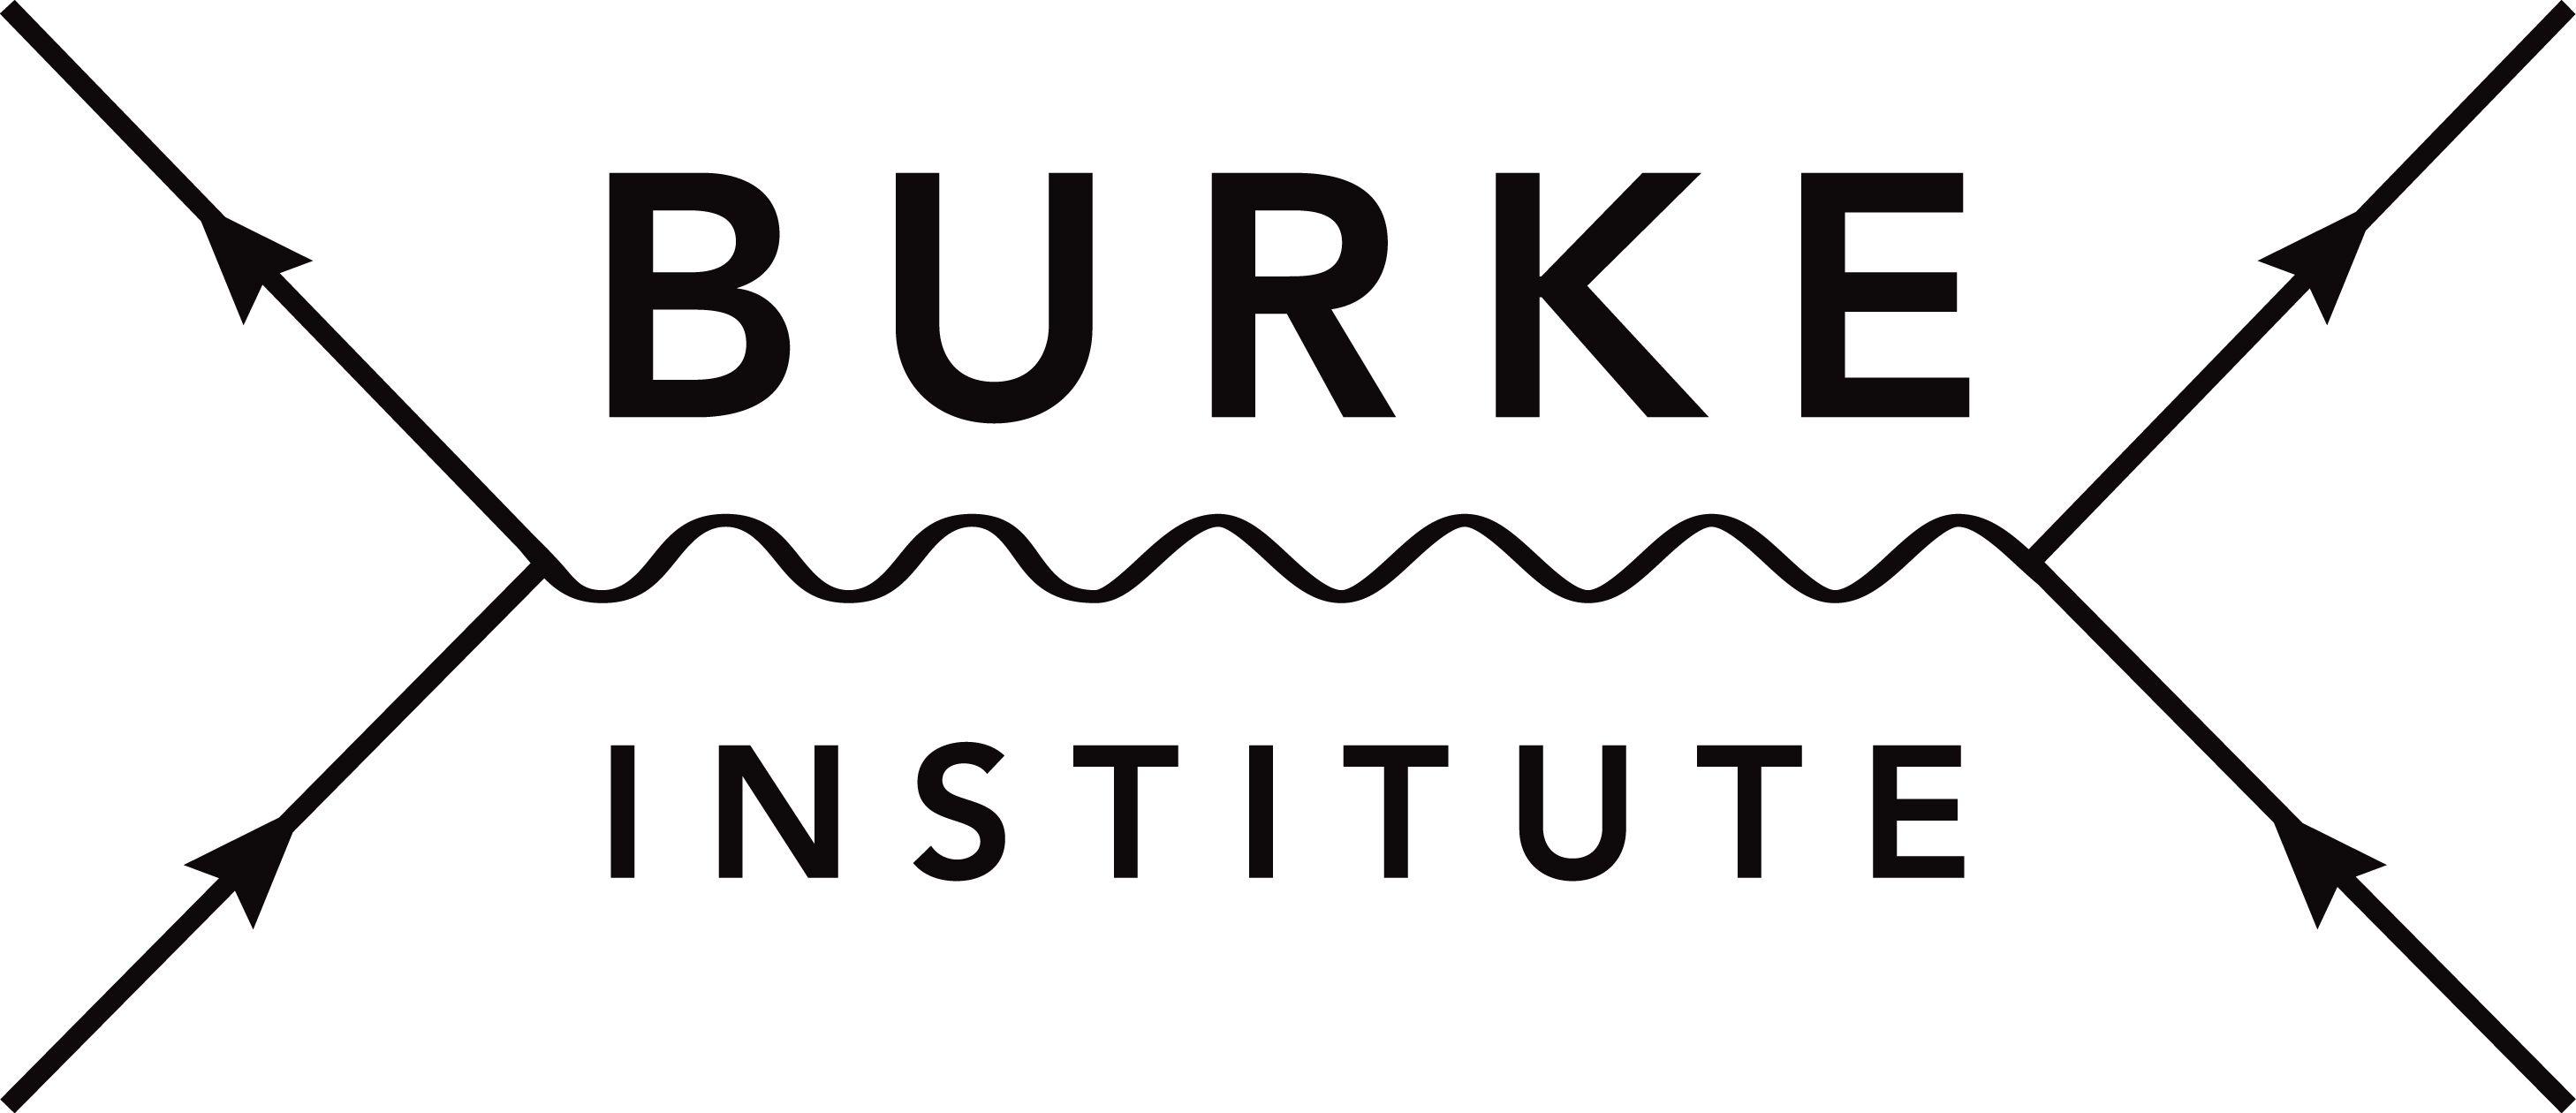 Caltech Logo - Burke Institute Logo - Caltech Walter Burke Institute for ...